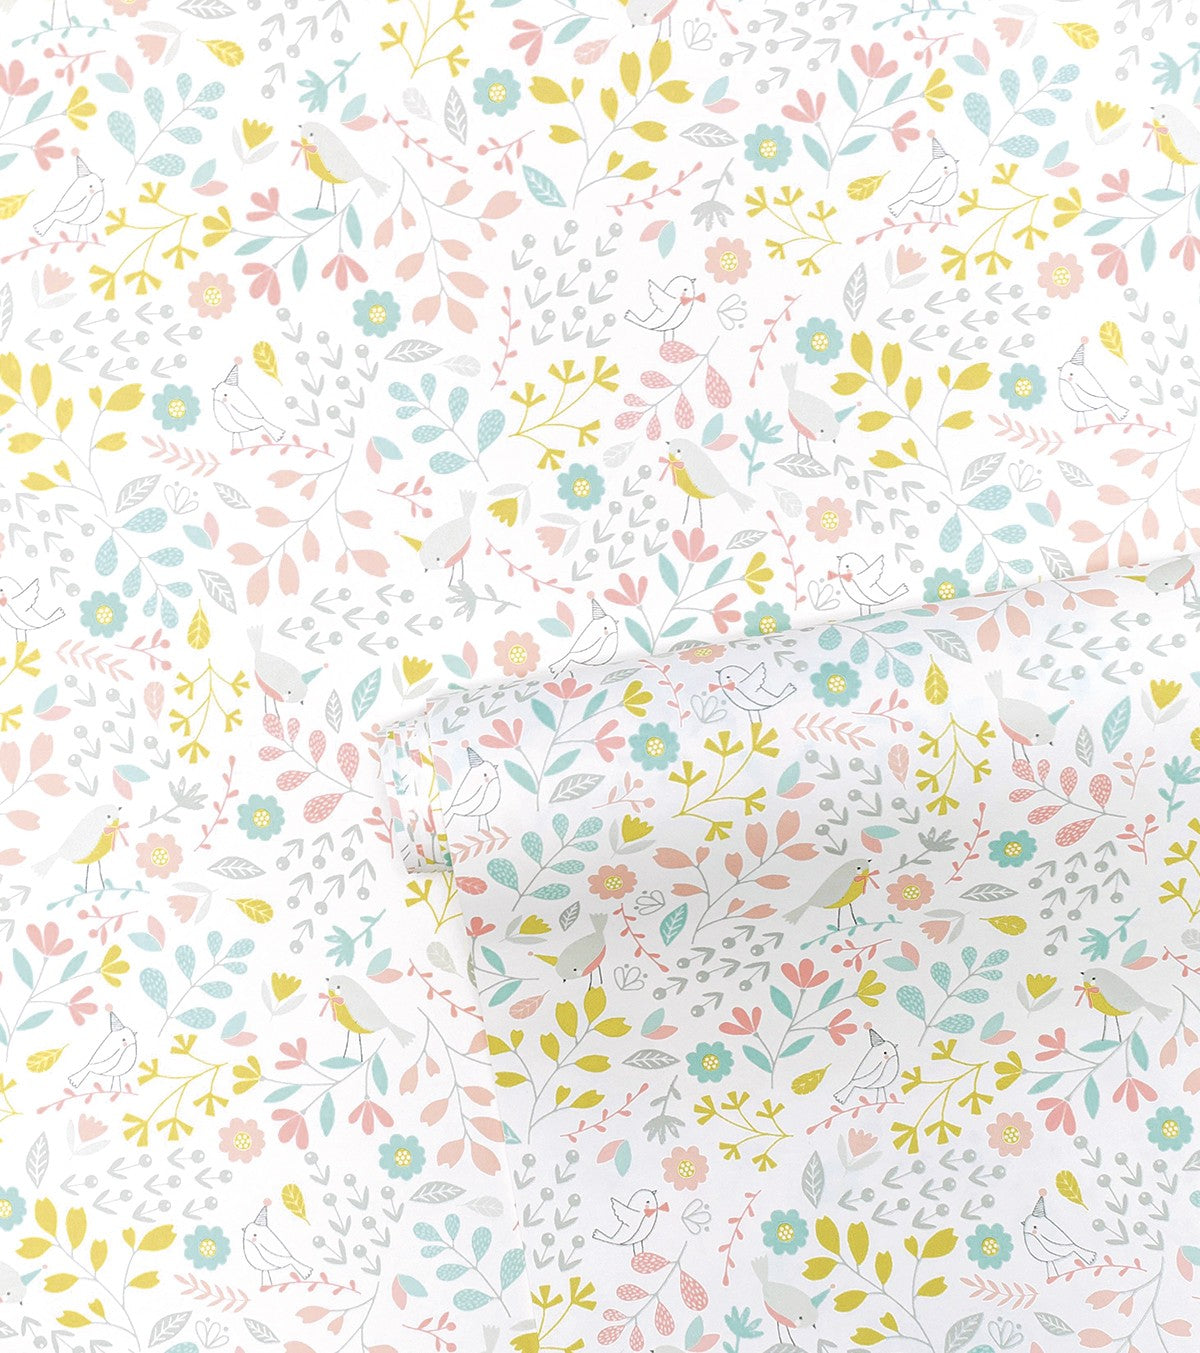 SWEET BUNNIES - Children's wallpaper - Flowers and birds motif